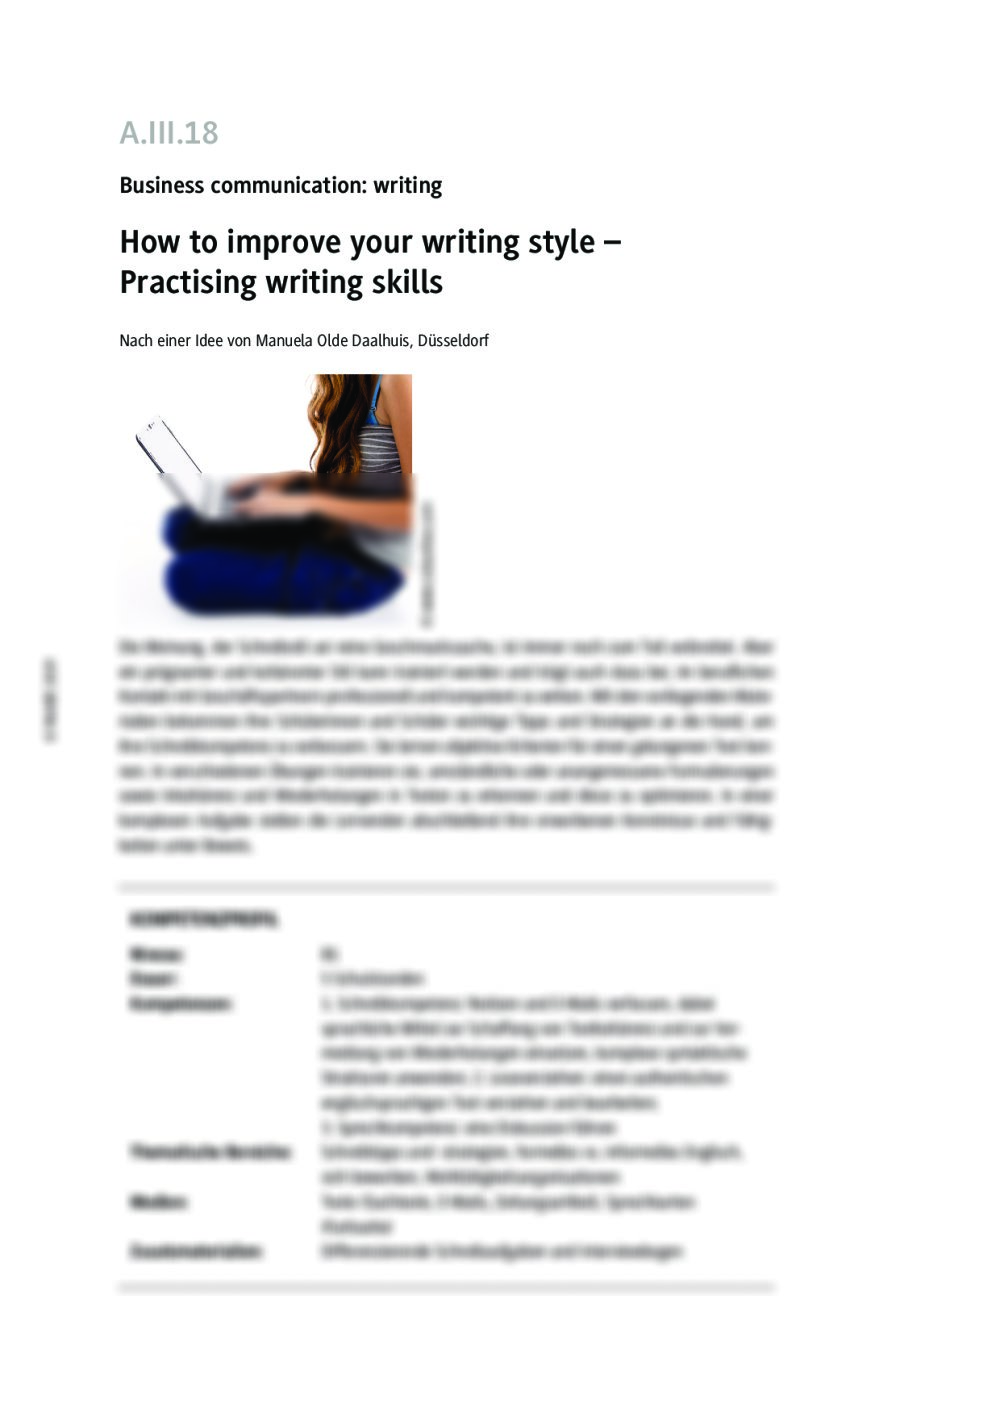 Practising your writing skills - Seite 1